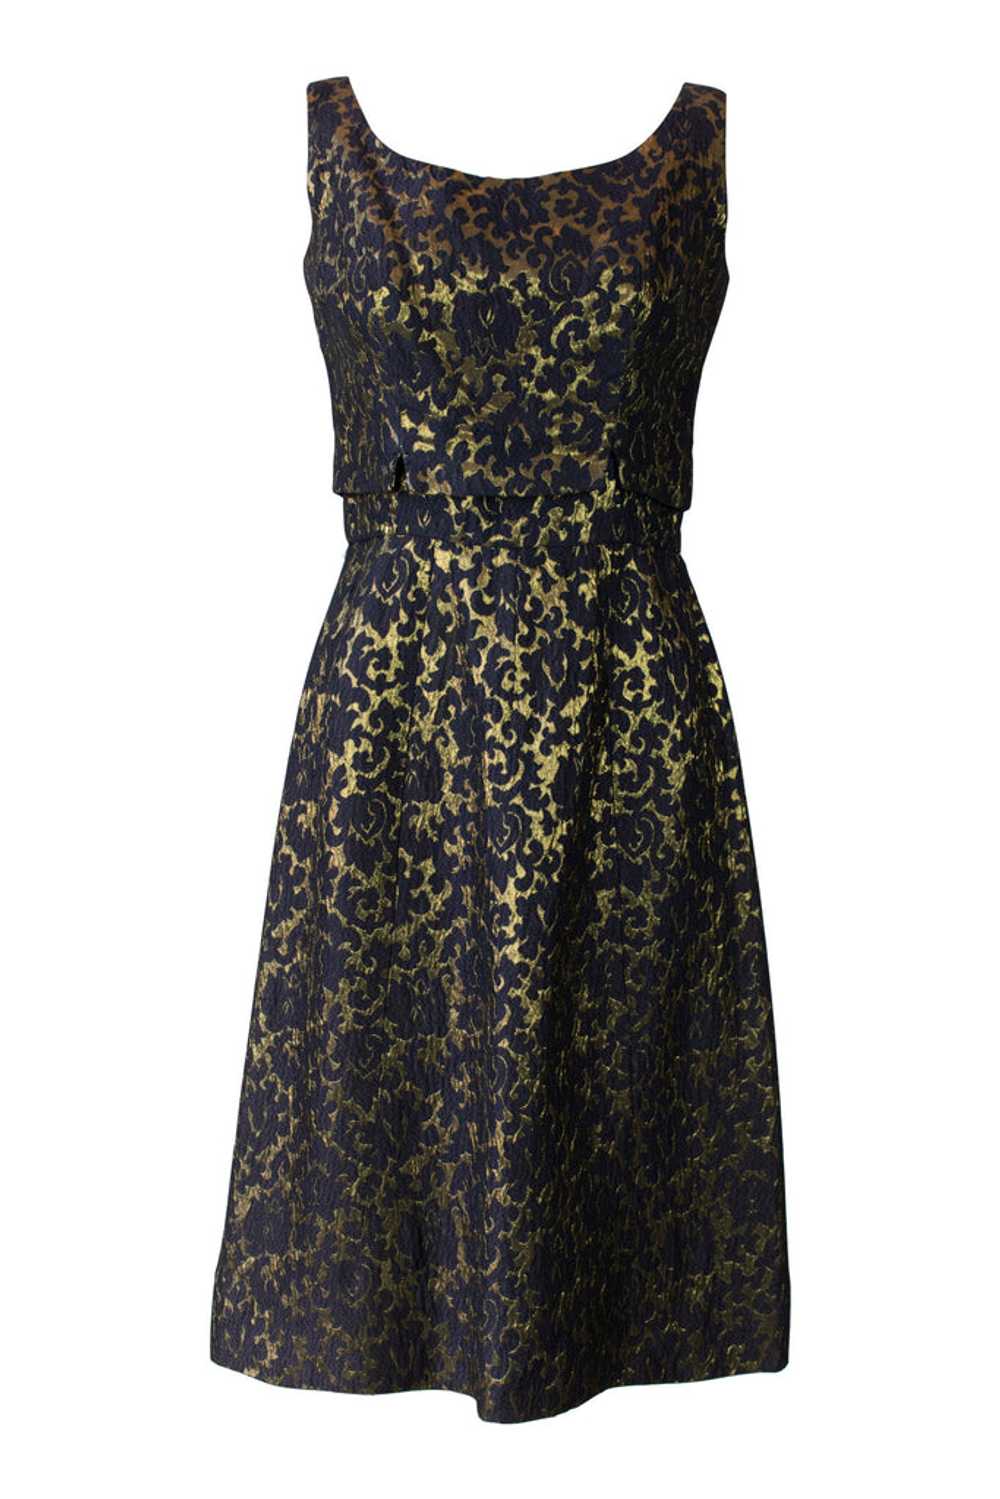 1960's Brocade Dress - image 1